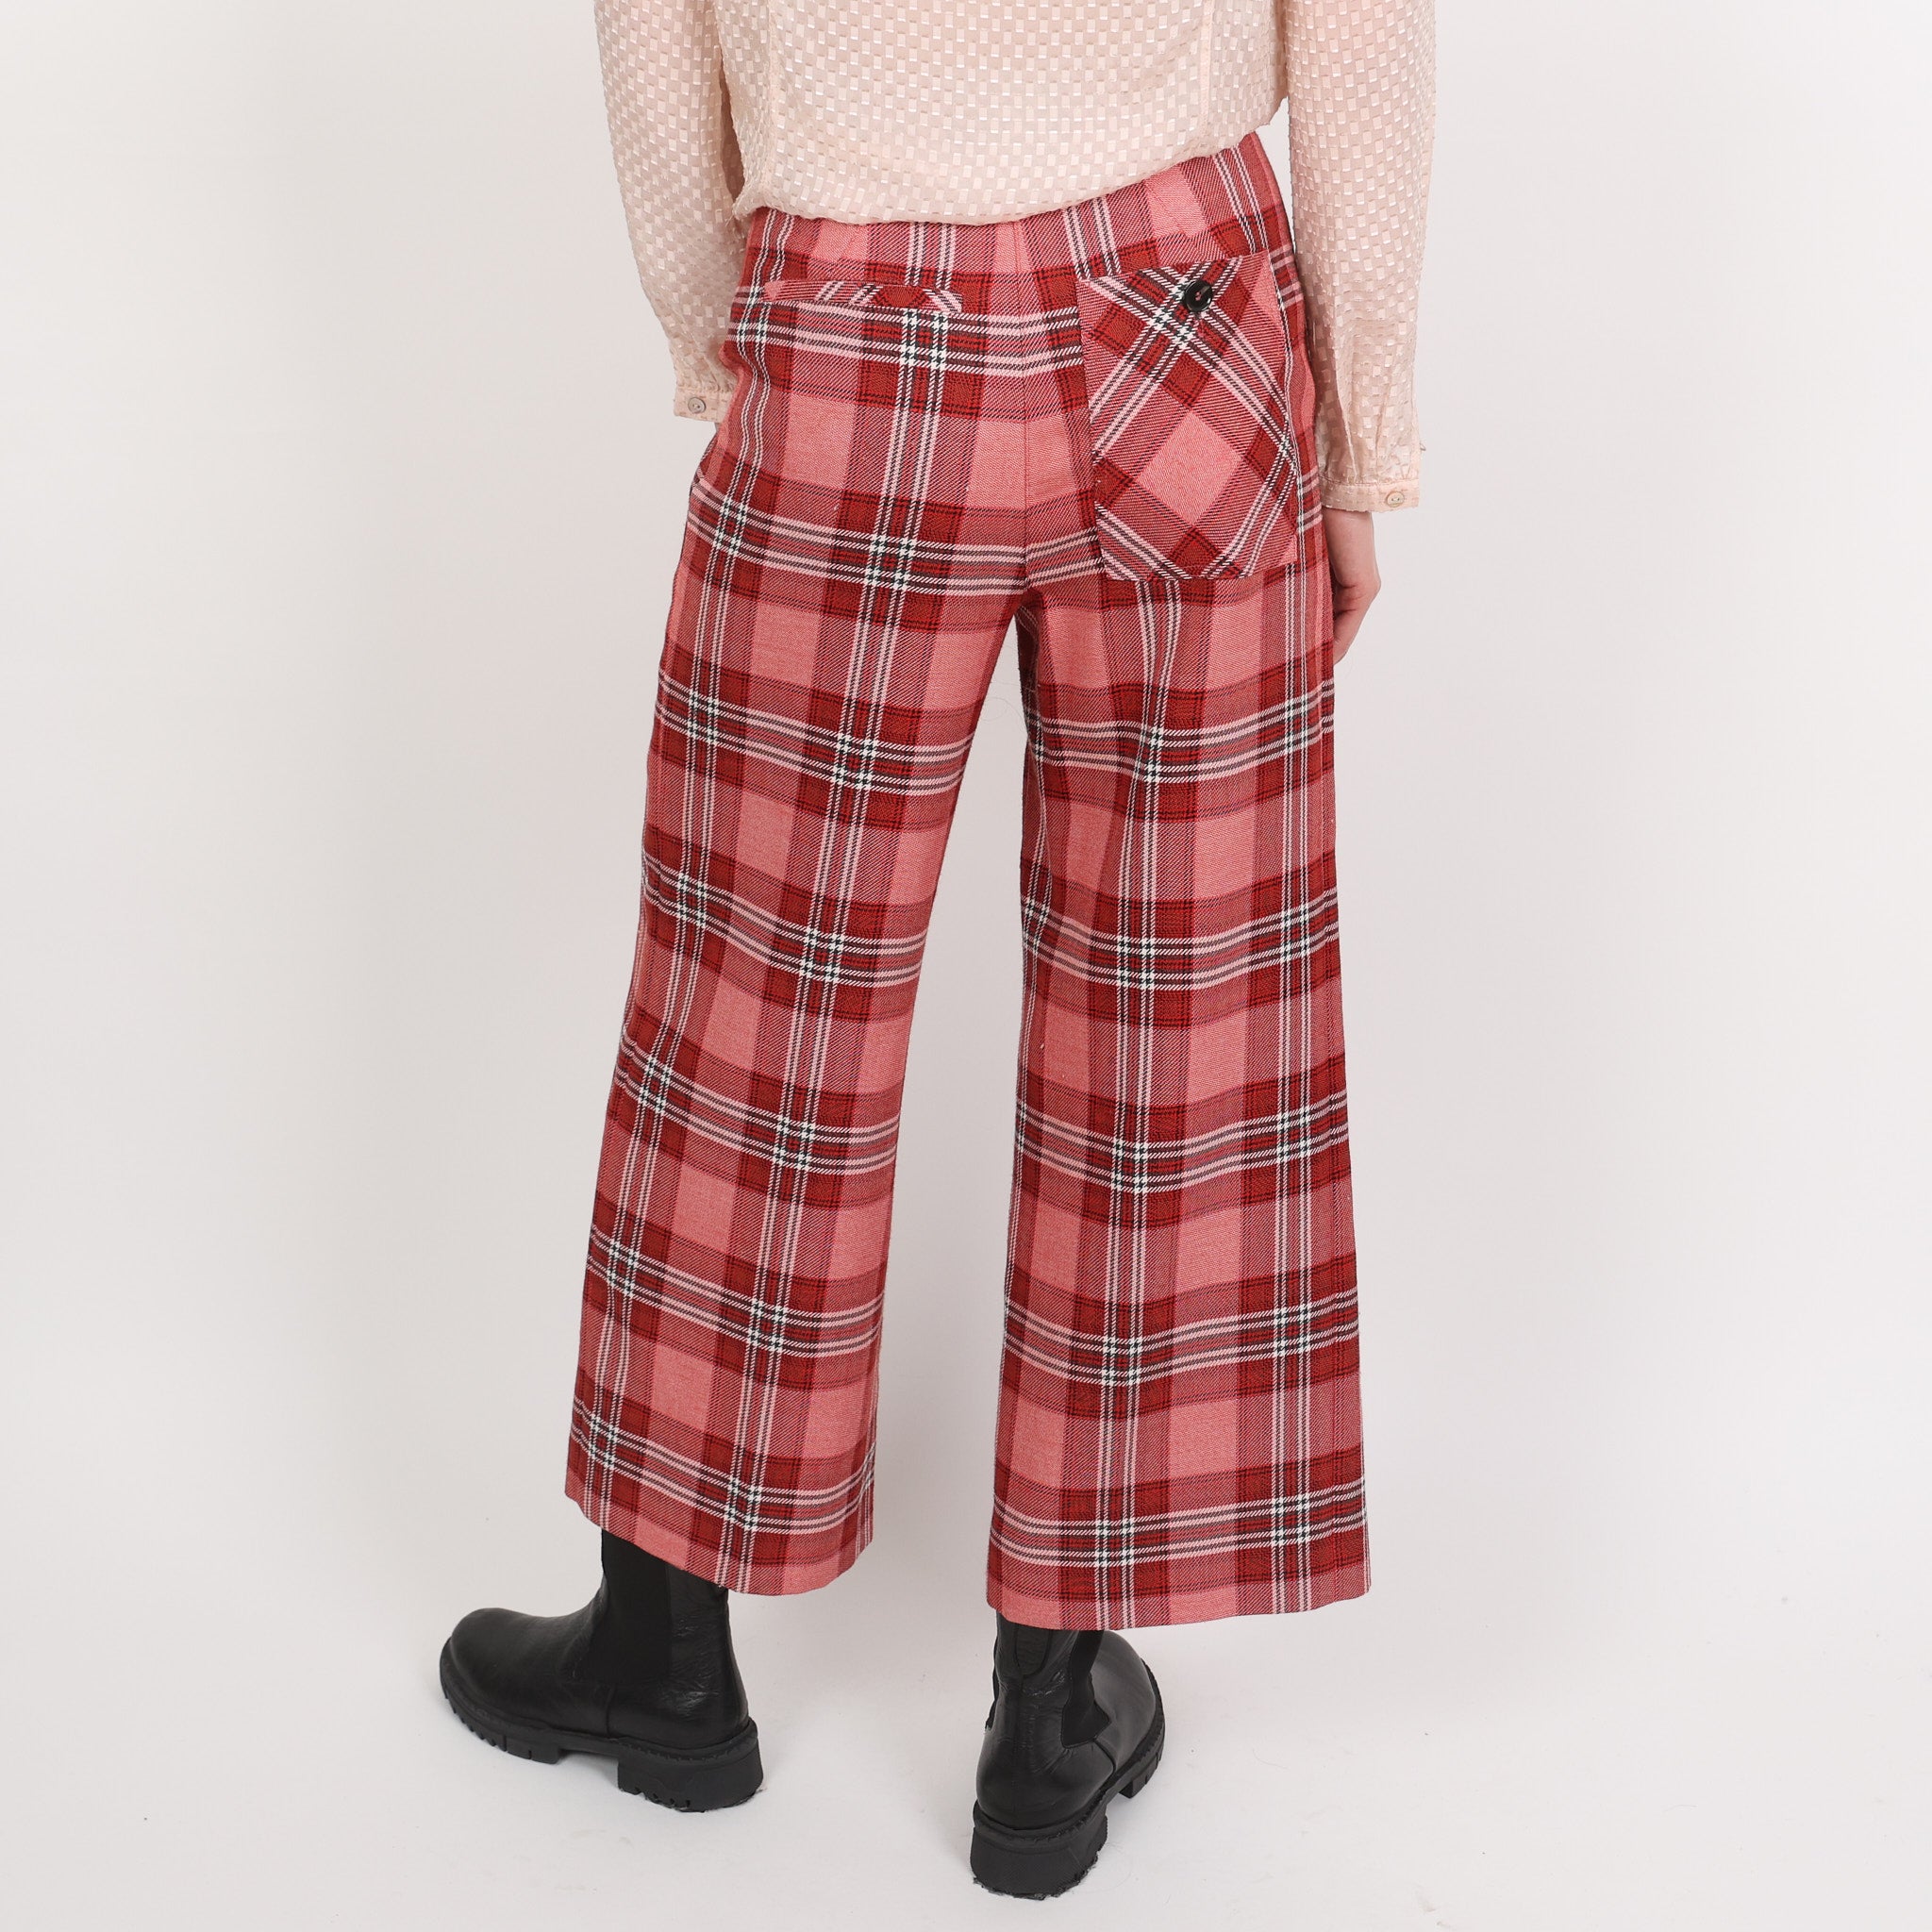 Trousers, UK Size 8